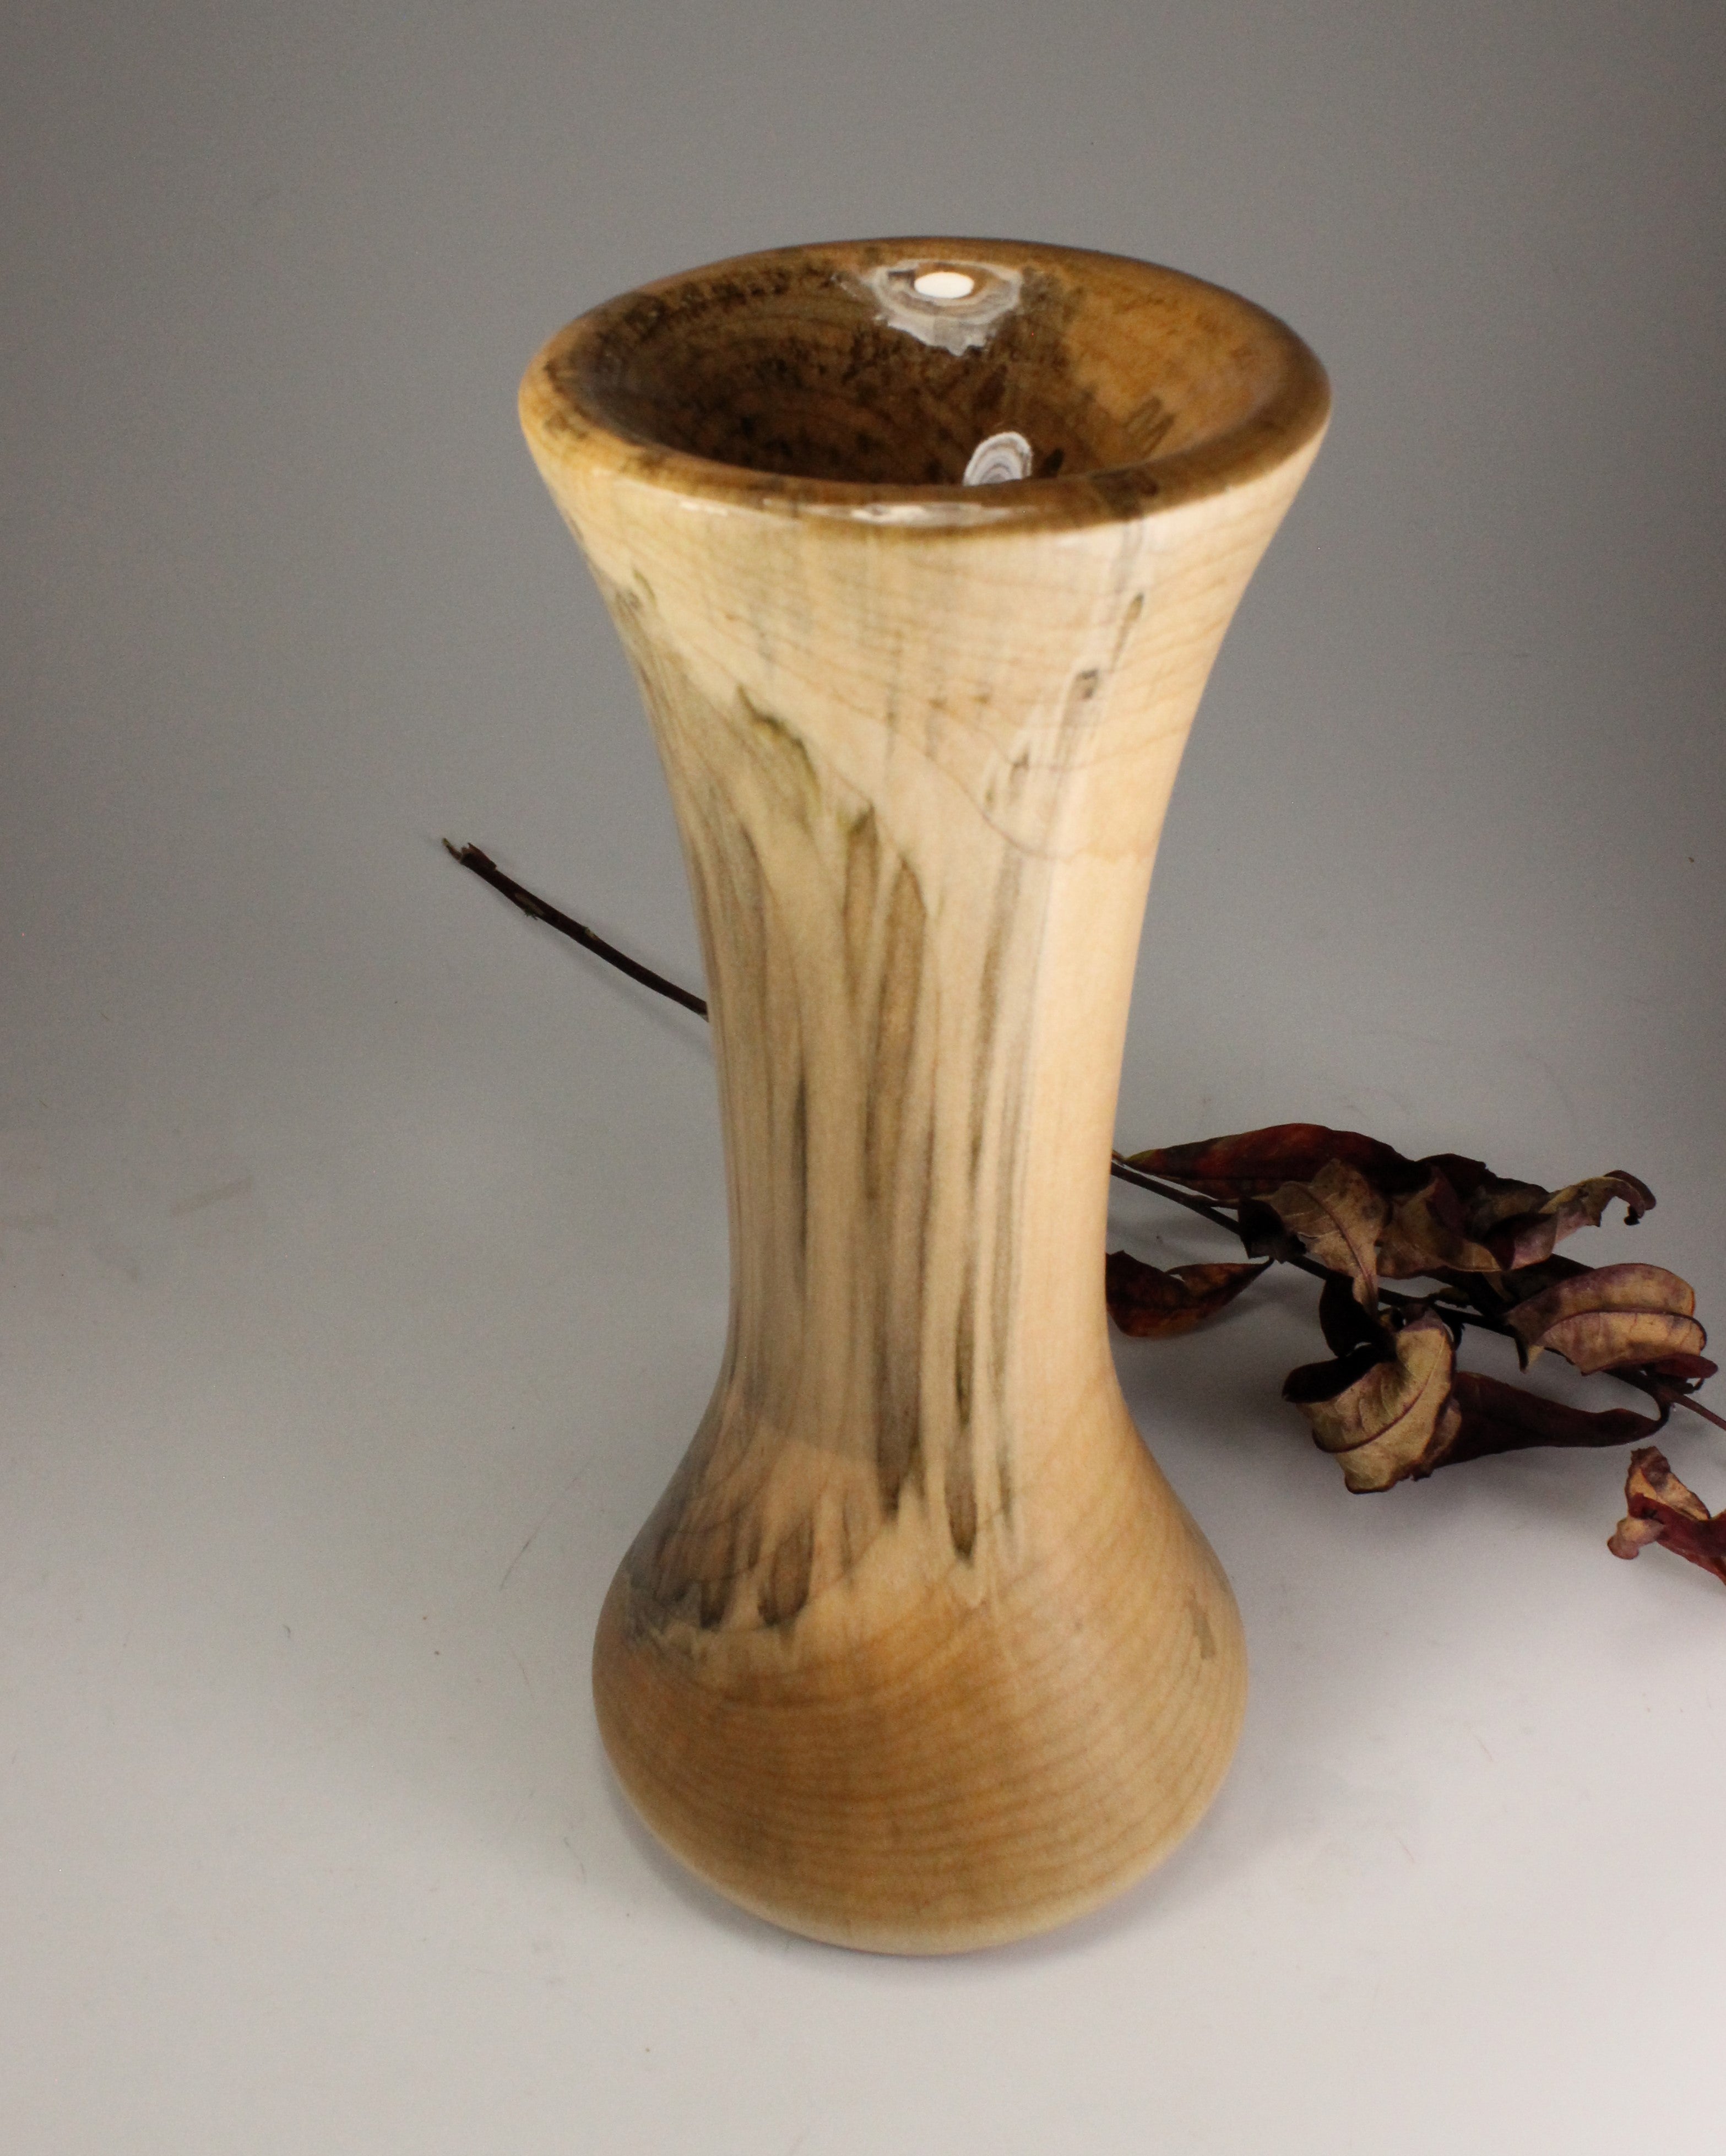 Maple wood vase